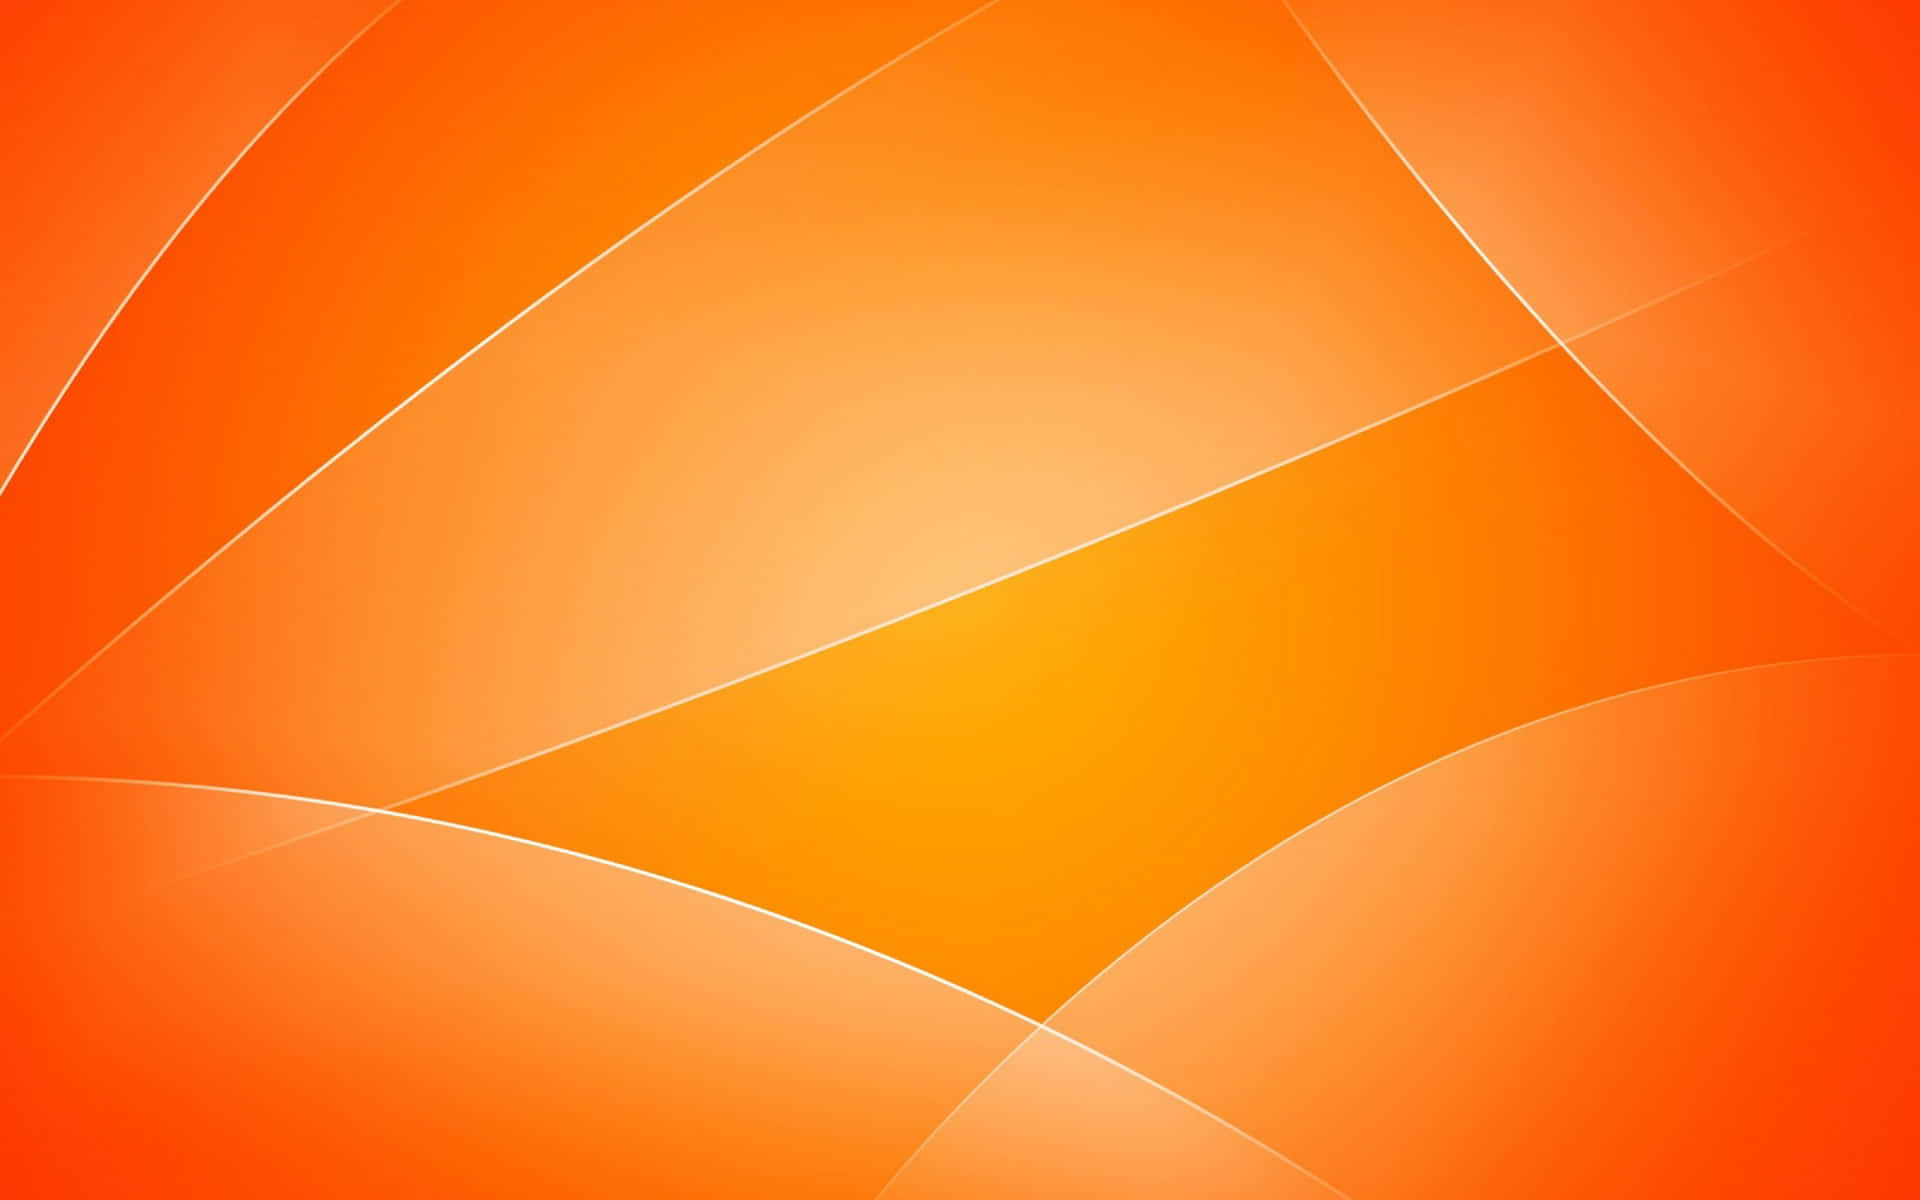 Vibrant and Cool Orange Background